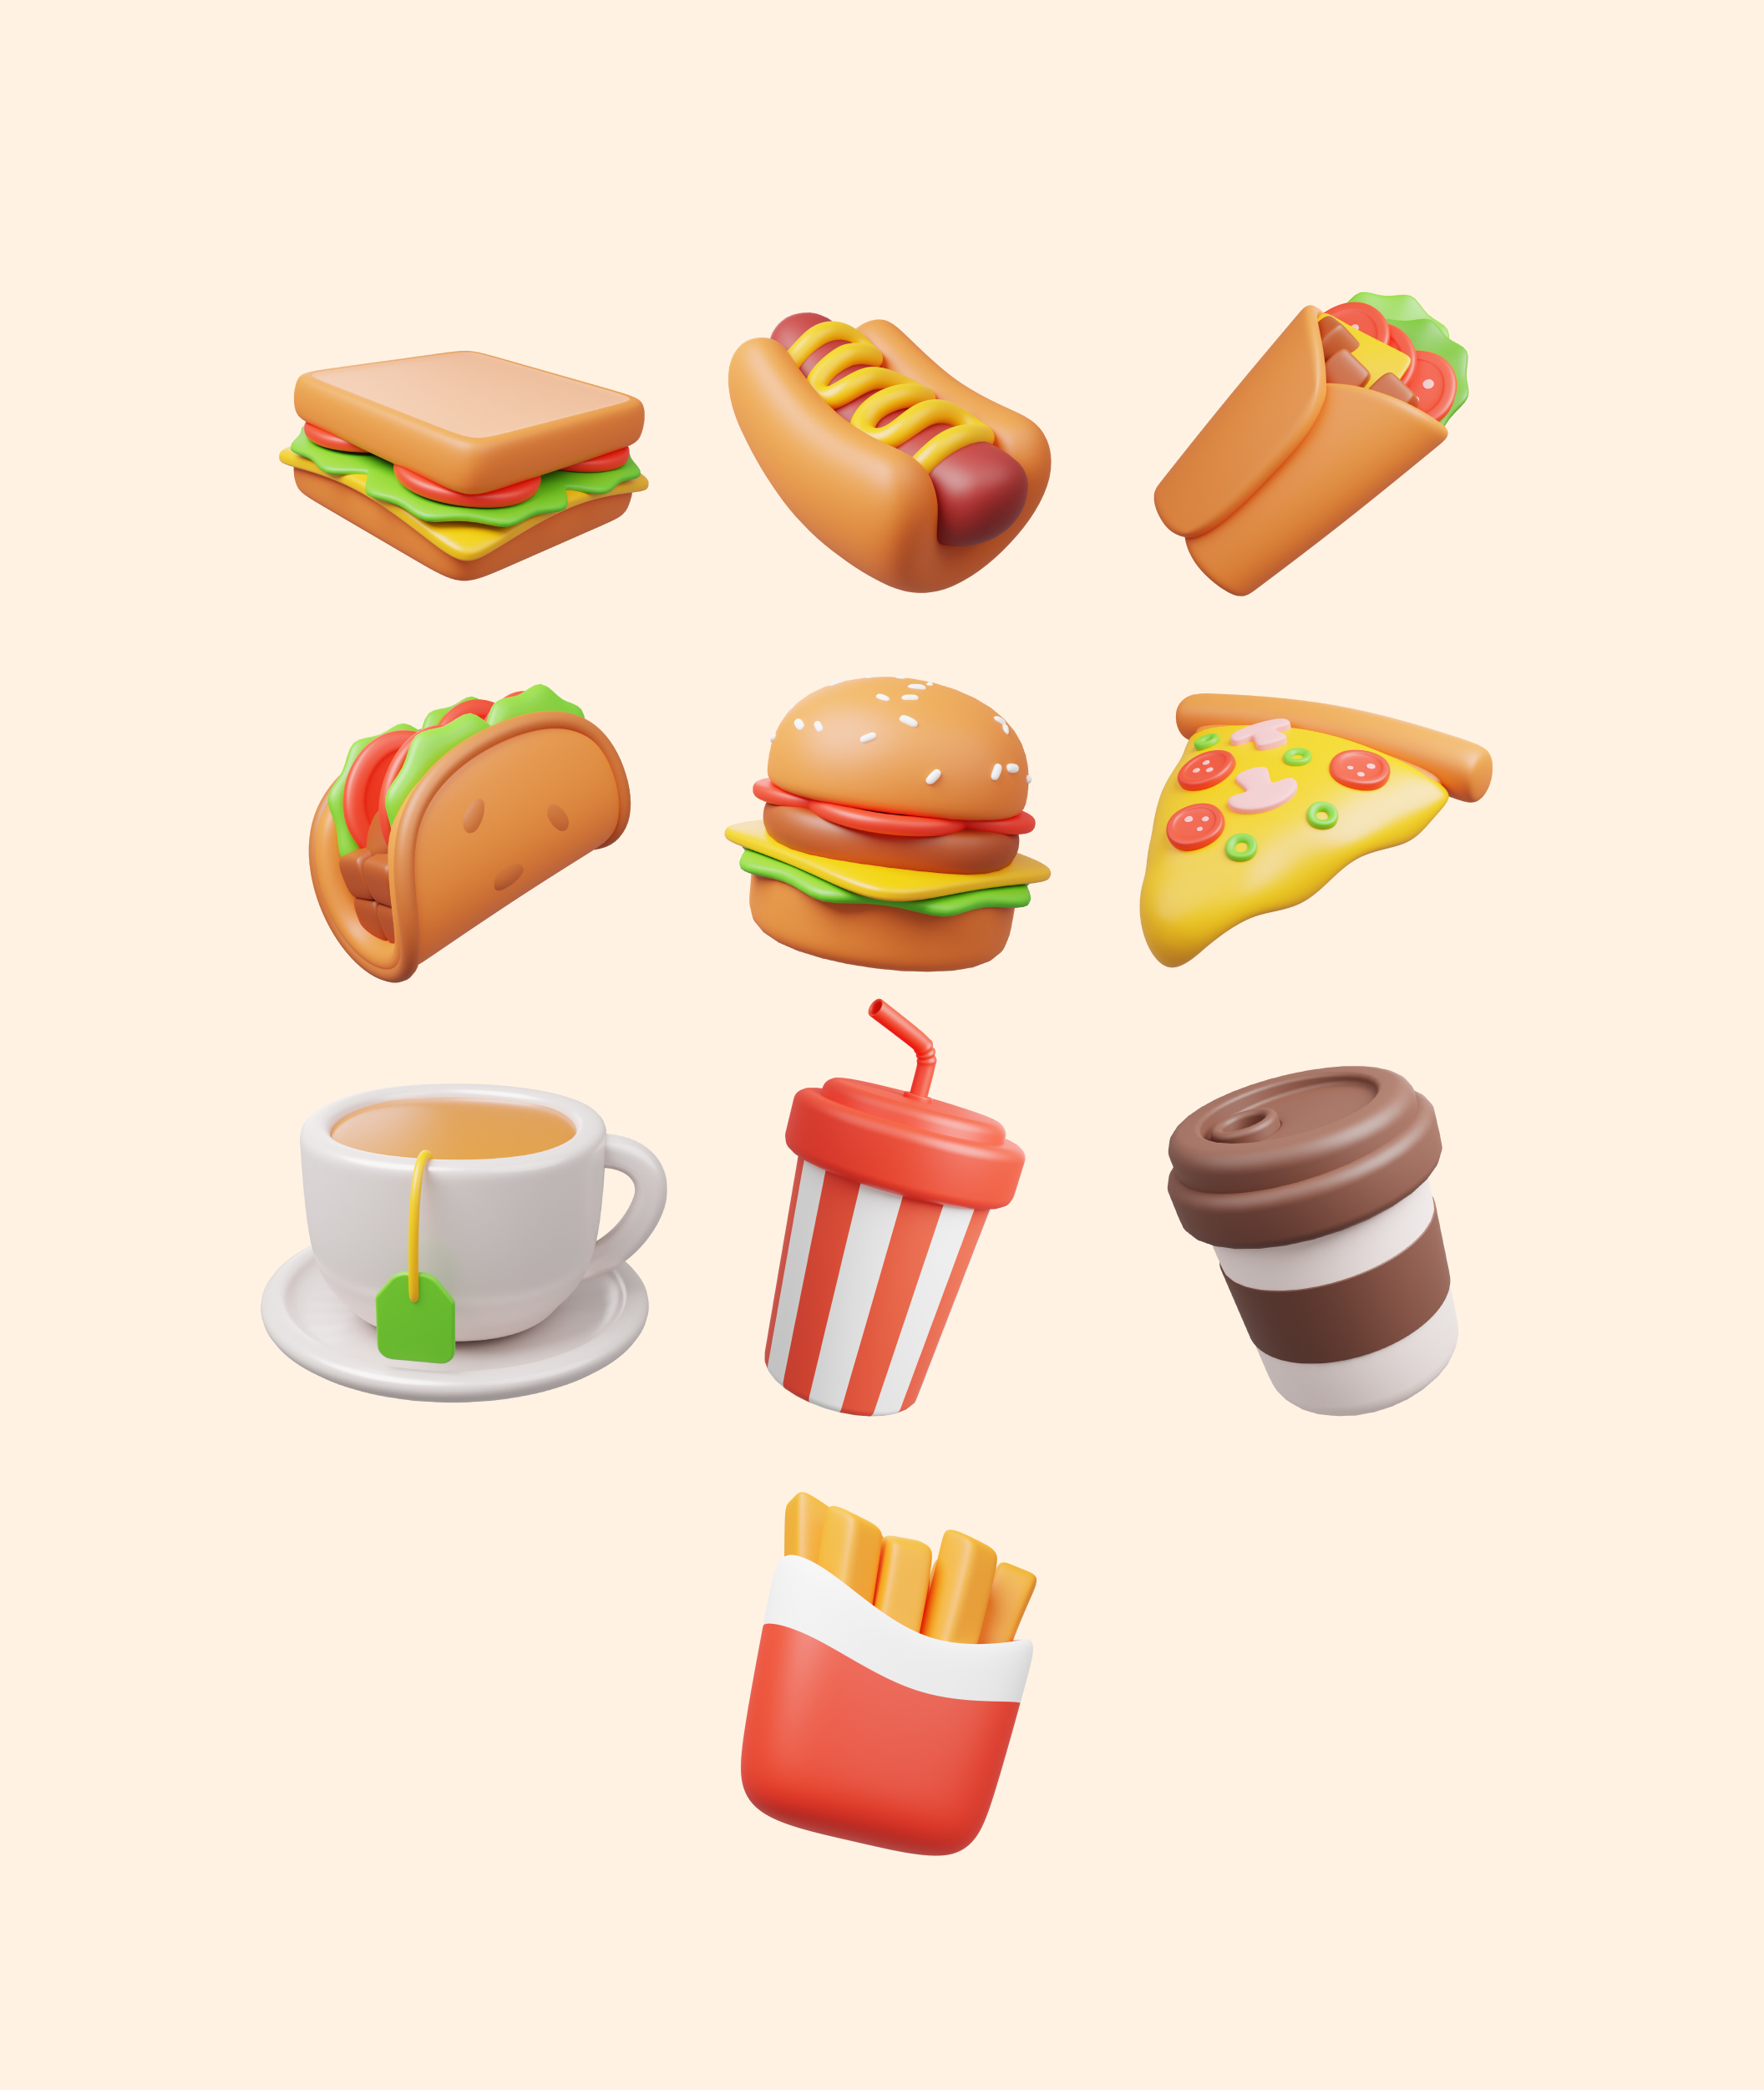 高质量Blender渲染食物饮料快餐店汉堡竖条3D插画素材 Food and Drink 3D Icon Pack